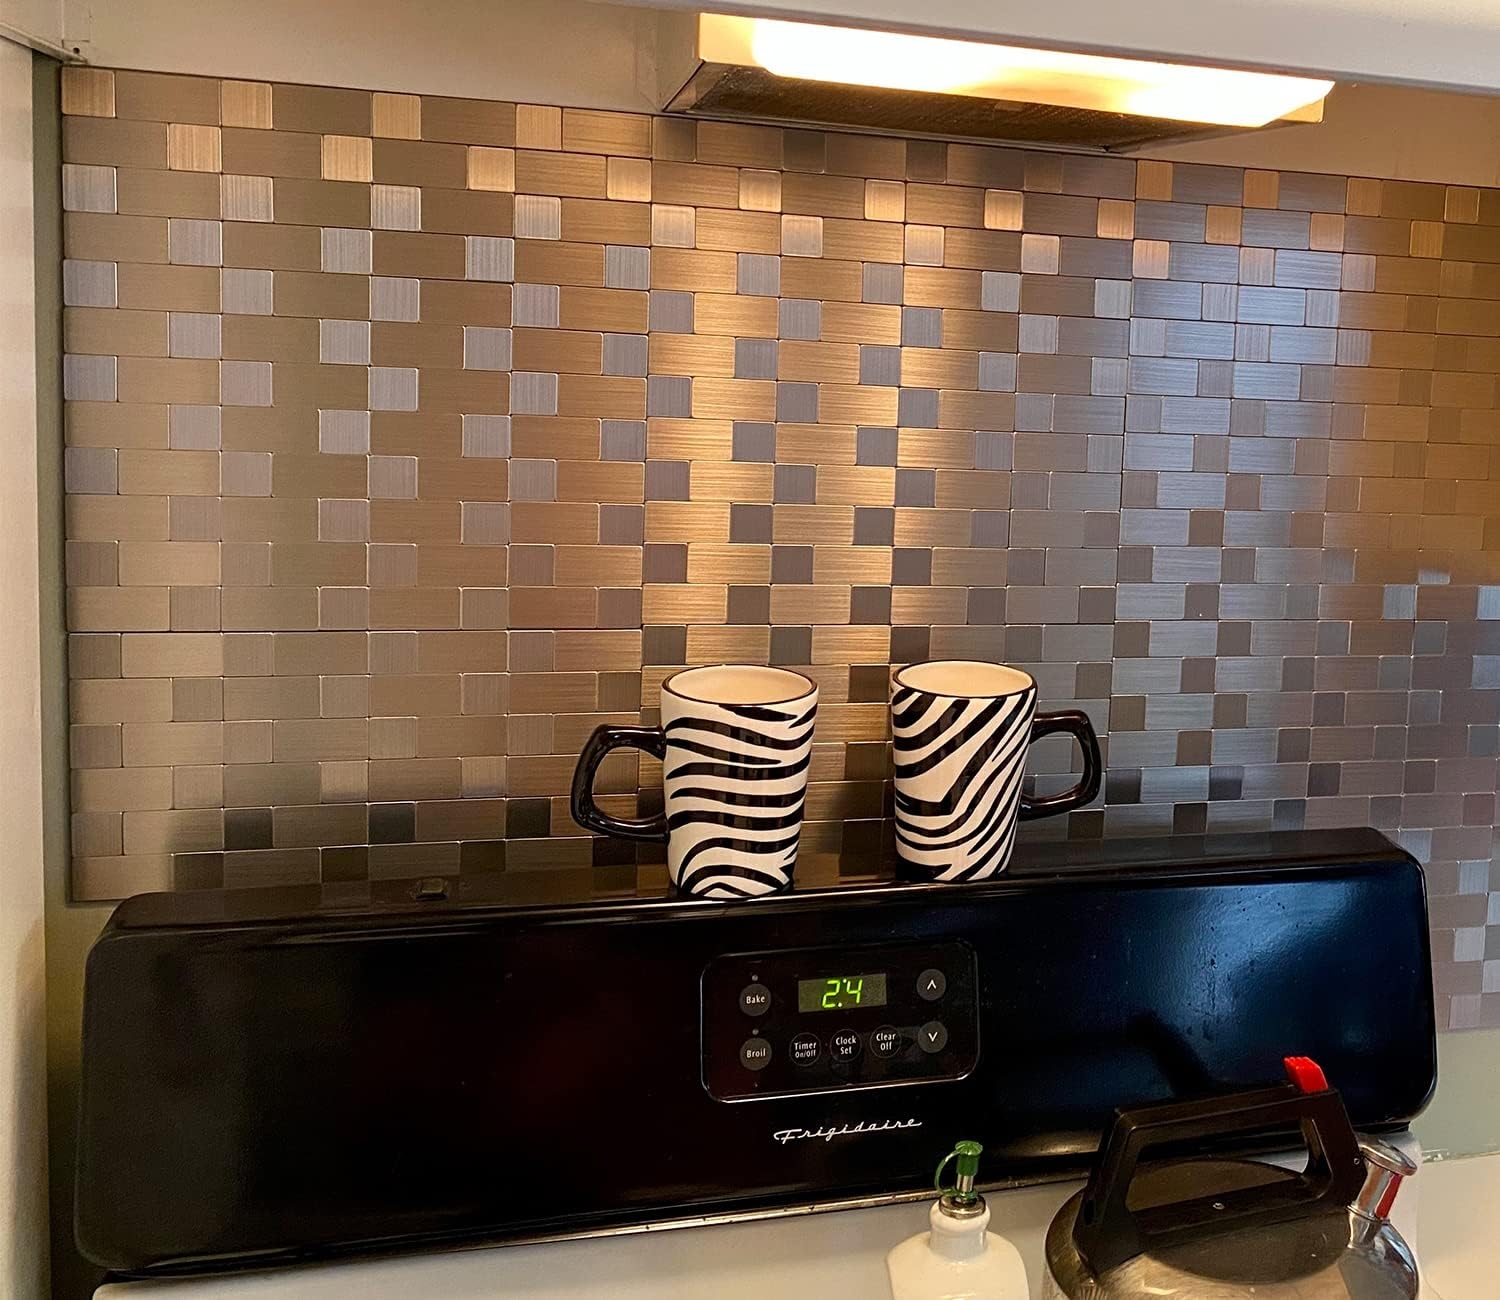 LK 5pcs Premium Self-Adhesive Metal Tiles - Peel and Stick Backsplash Tiles for Kitchen (LKB6215, 12"x12", Silver)